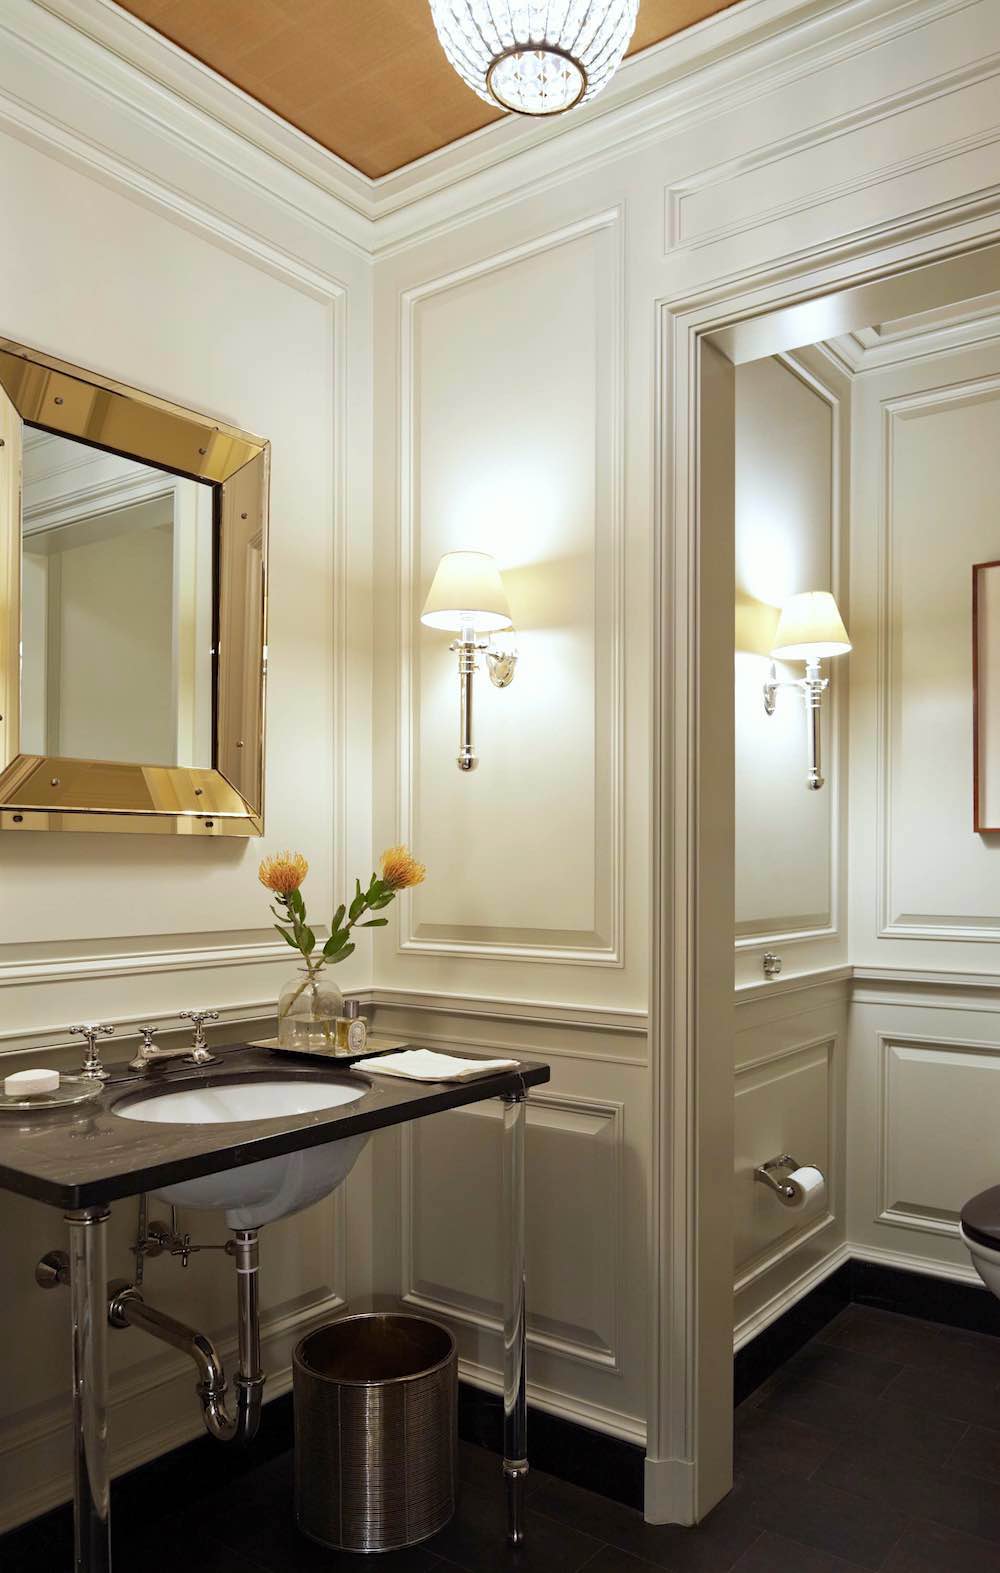 Gil Schafer elegant hotel-style master bathroom design